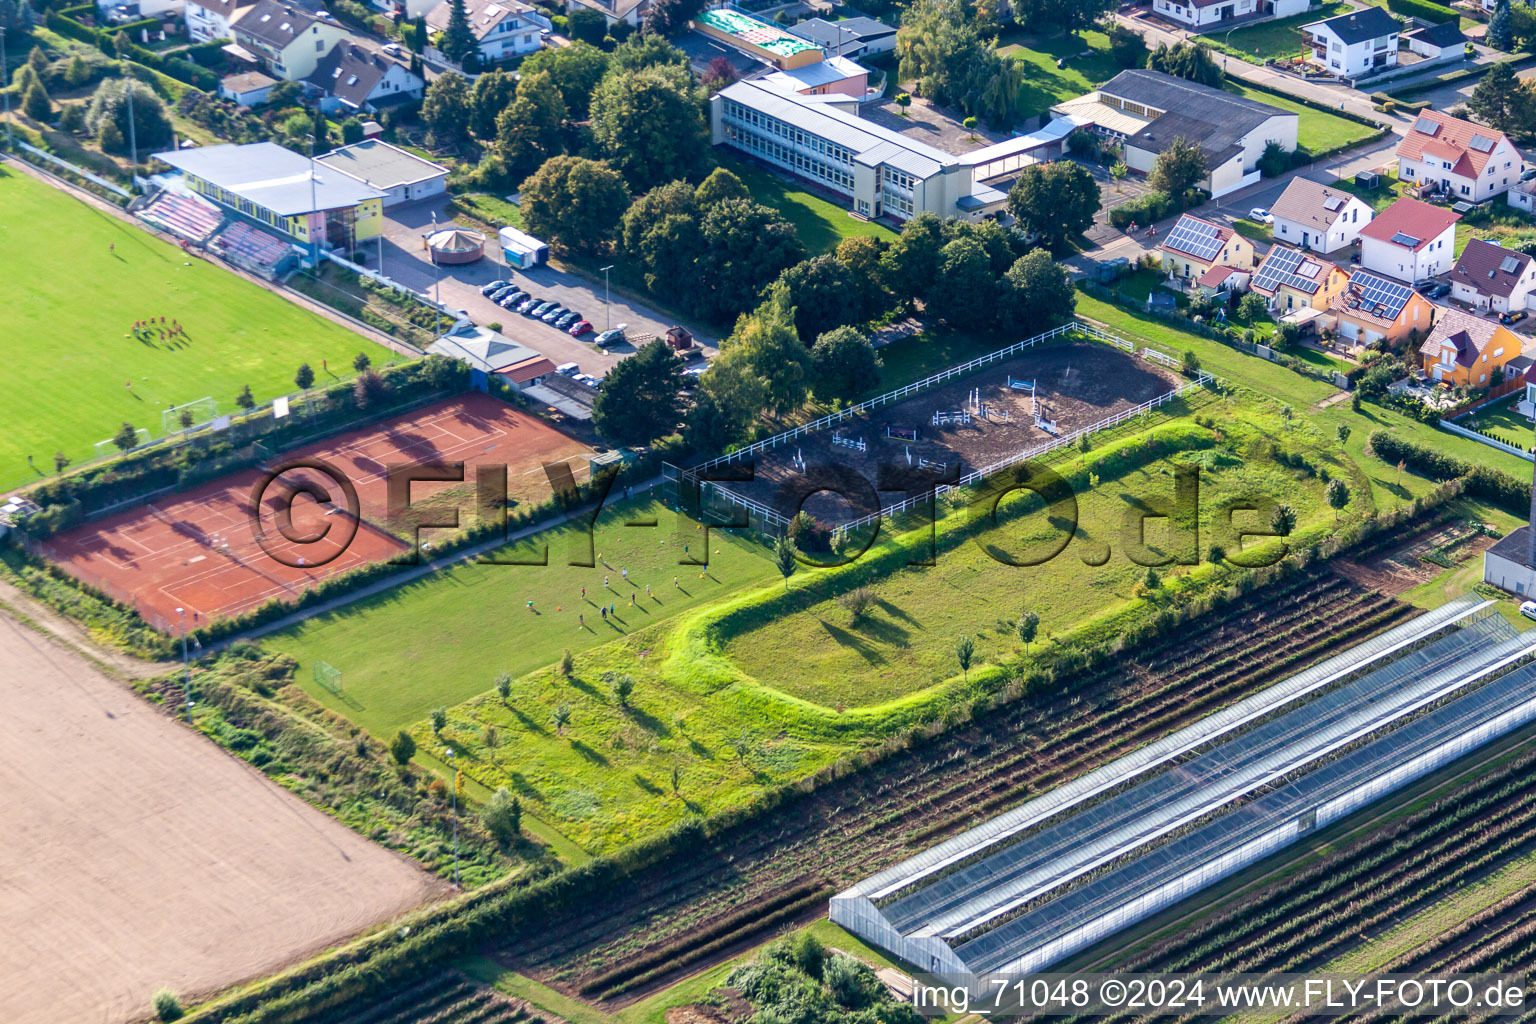 Vue aérienne de SV Weingarten, club de tennis et terrain de football à Weingarten dans le département Rhénanie-Palatinat, Allemagne